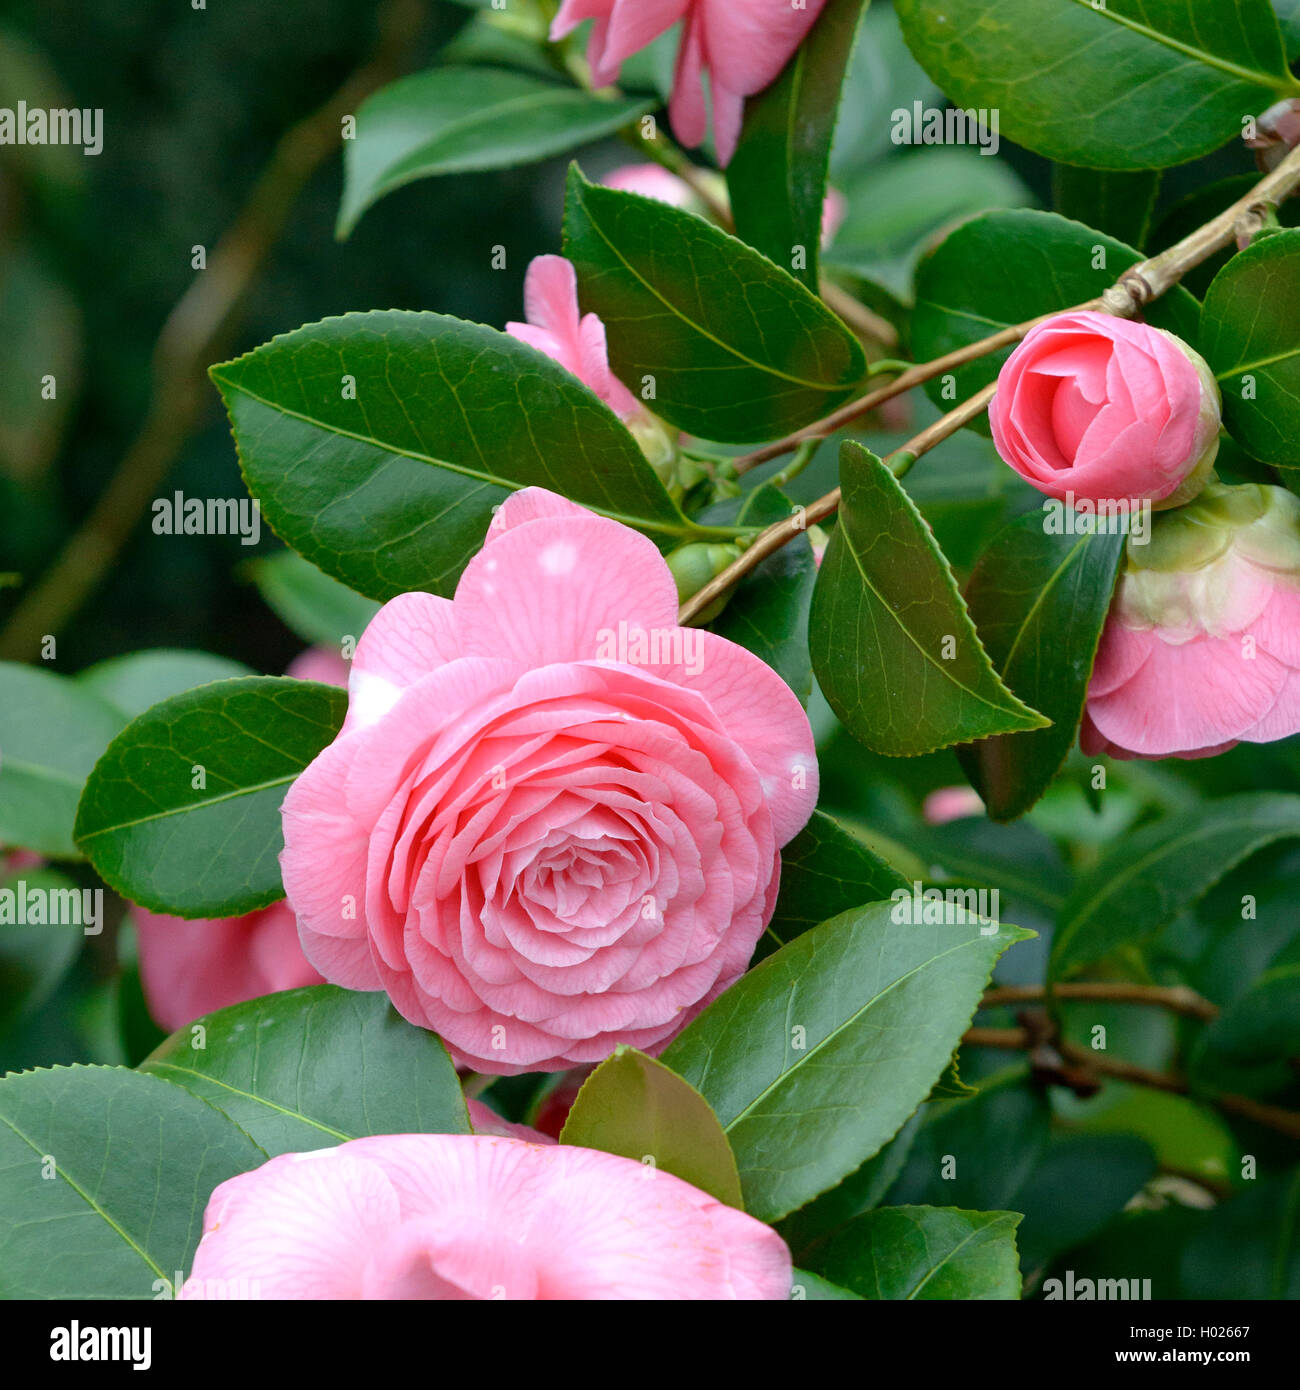 Japanese camellia (Camellia japonica 'Saccoi', Camellia japonica cultivar Saccoi Saccoi), Banque D'Images